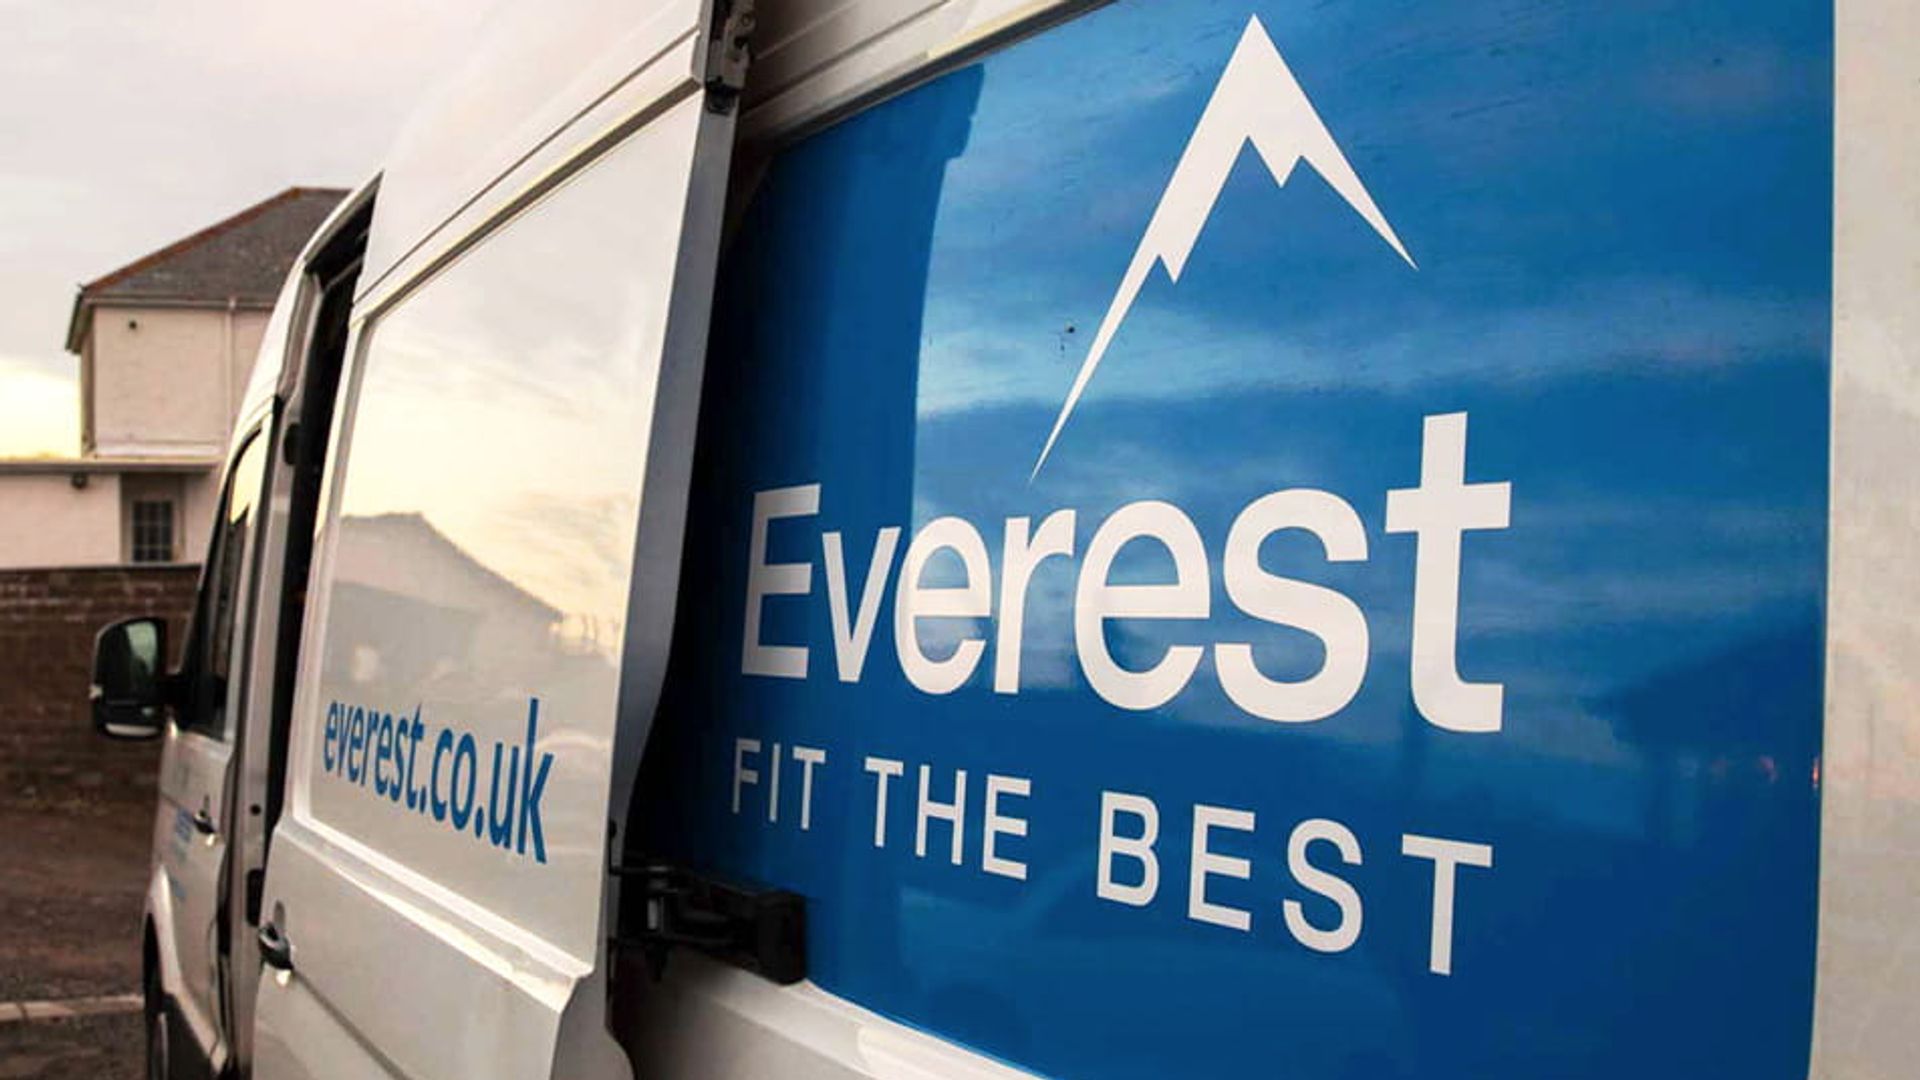 Double glazing giant Everest crashes into administration